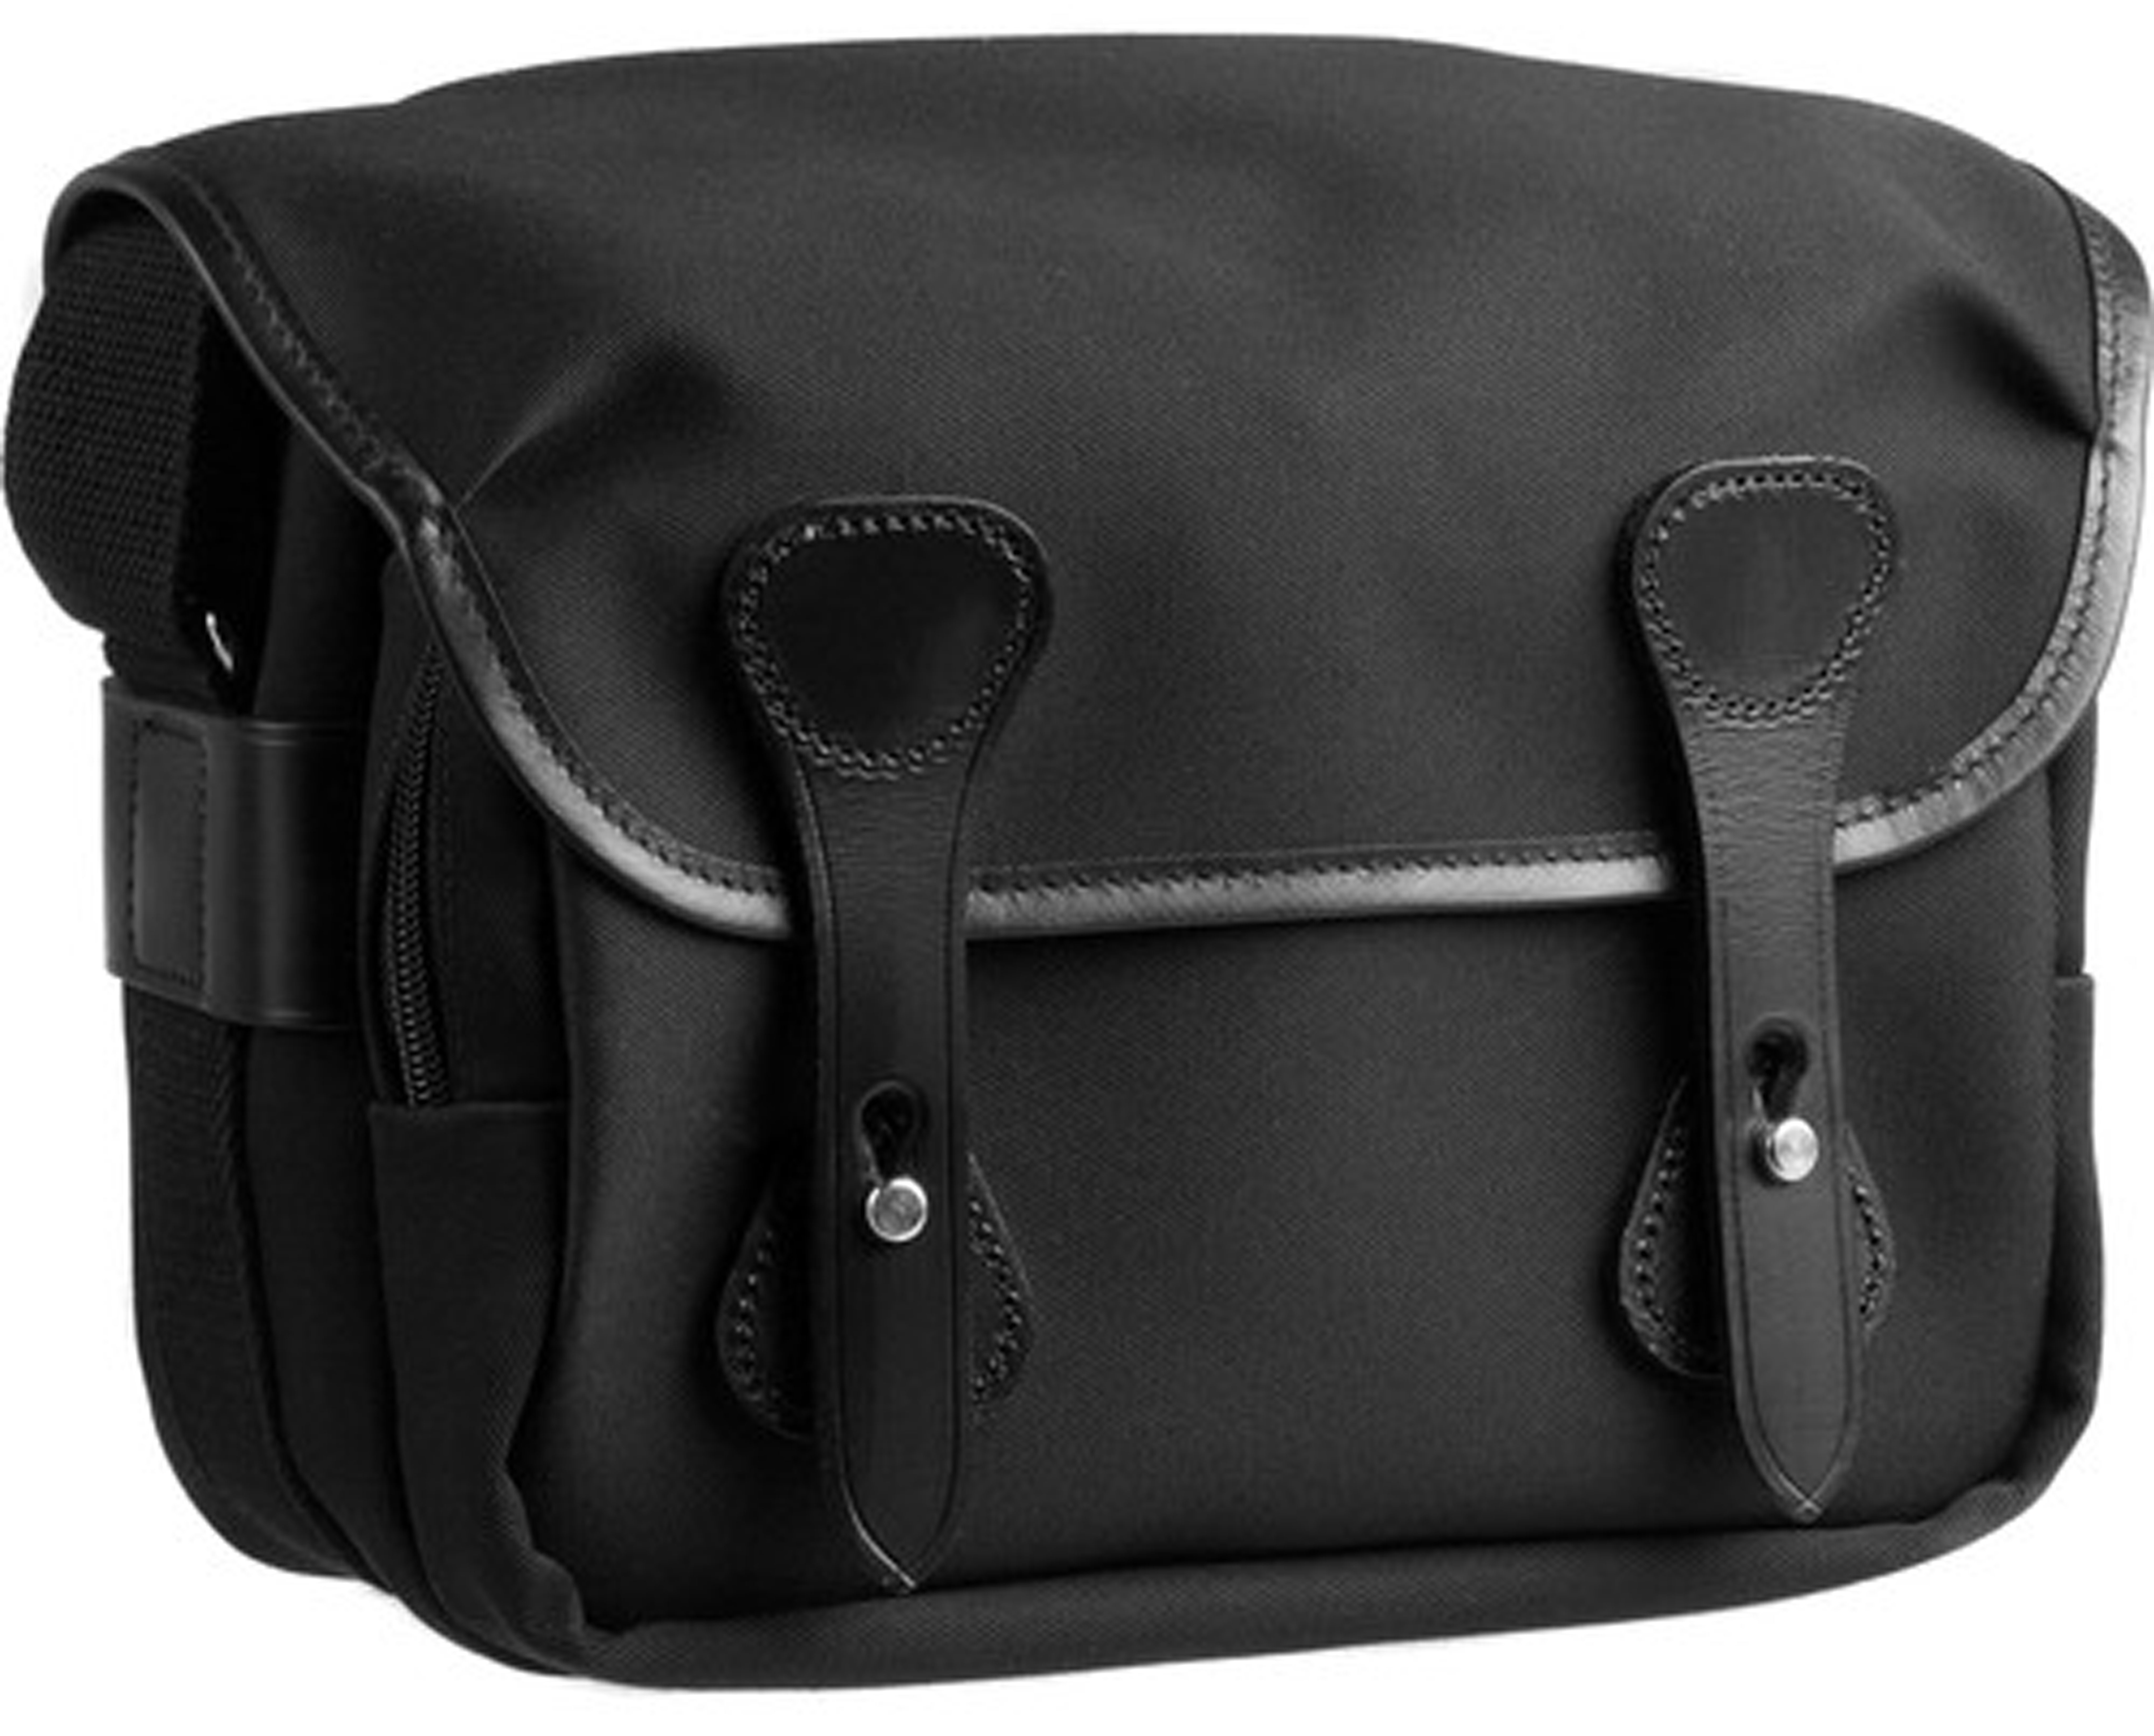 Leica Combination Bag Billingham for M Series Cameras - Black